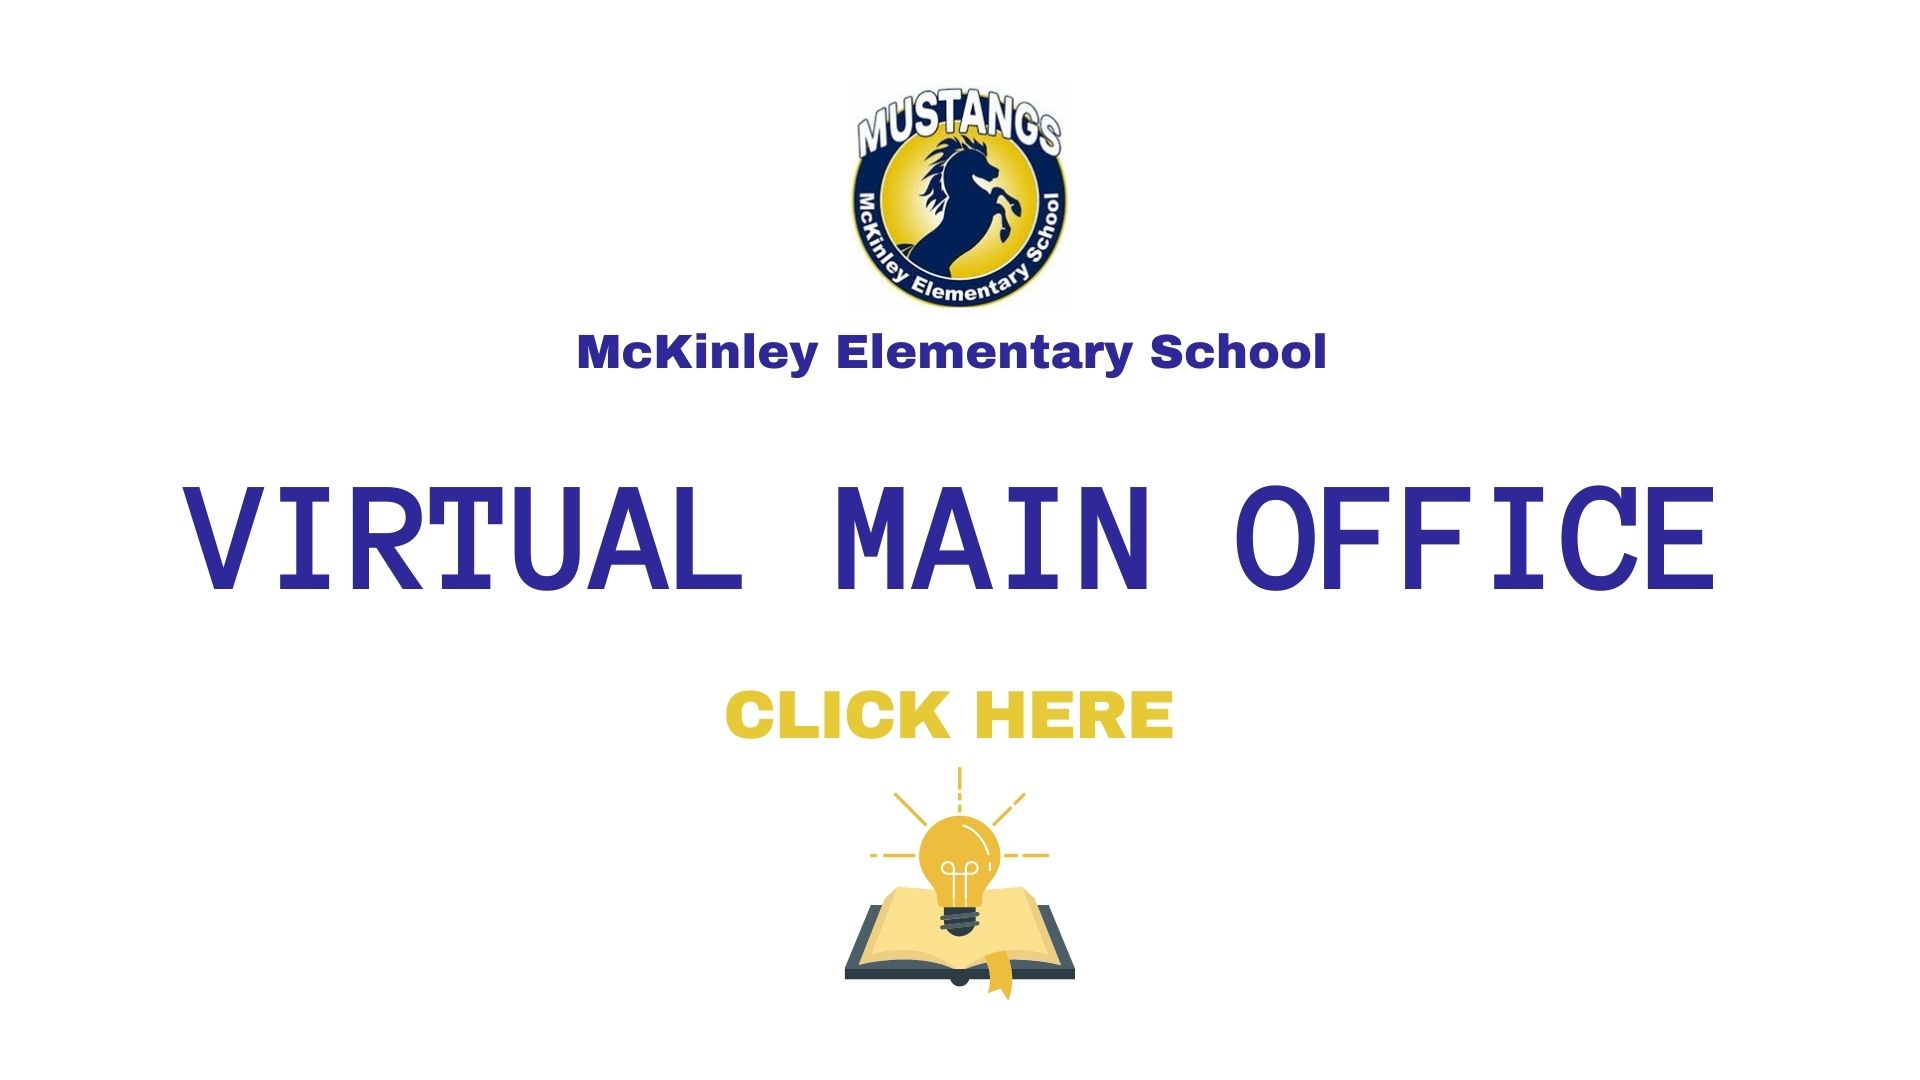 McKinley Elementary School (1)